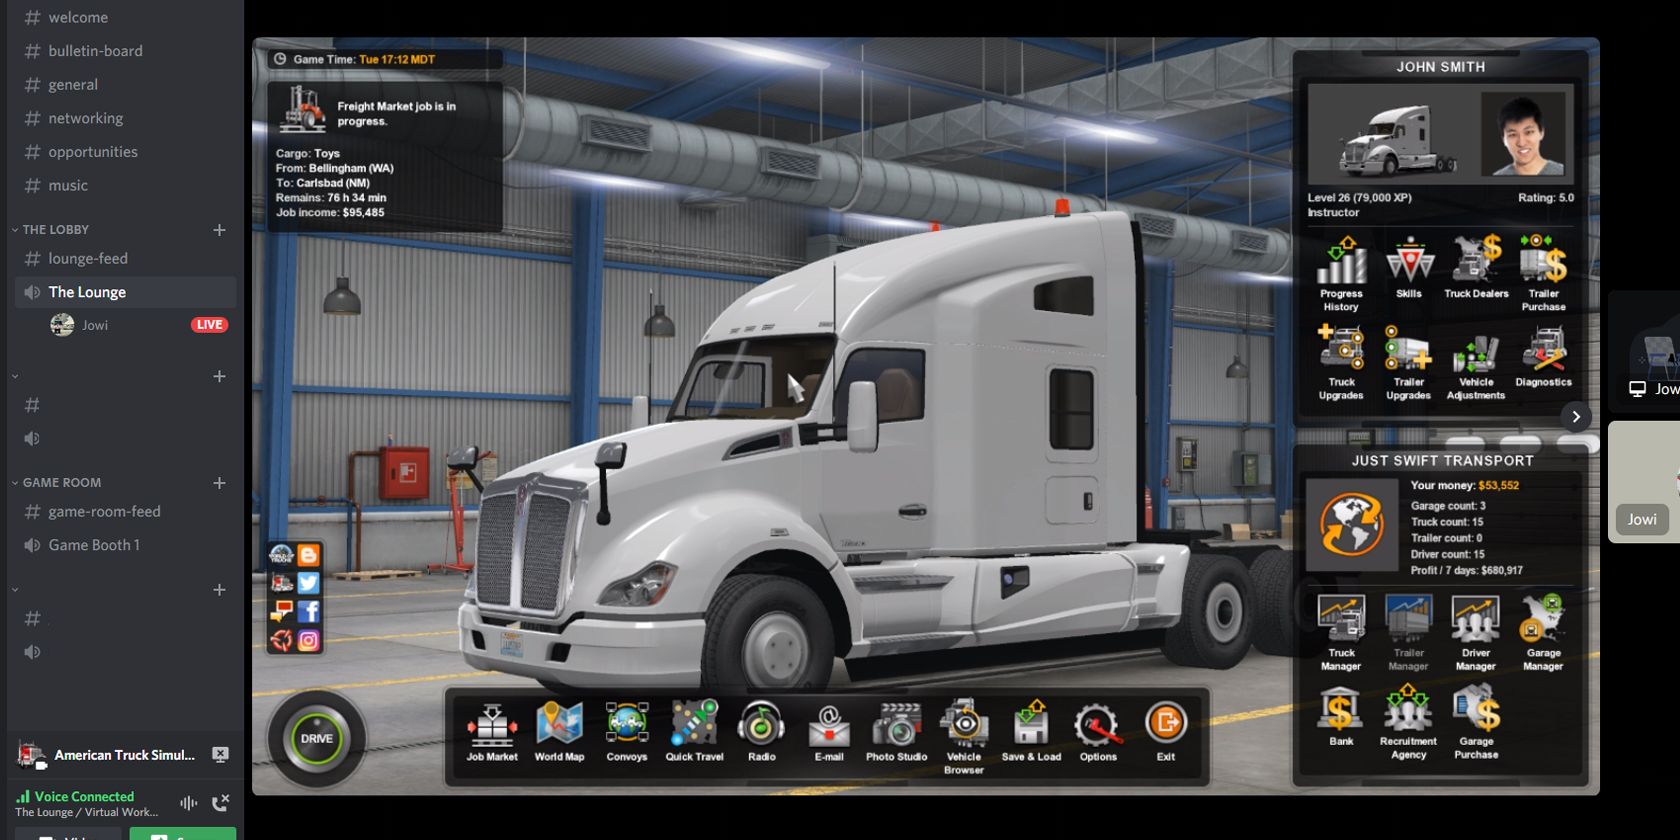 Streaming American Truck simulator on Discord